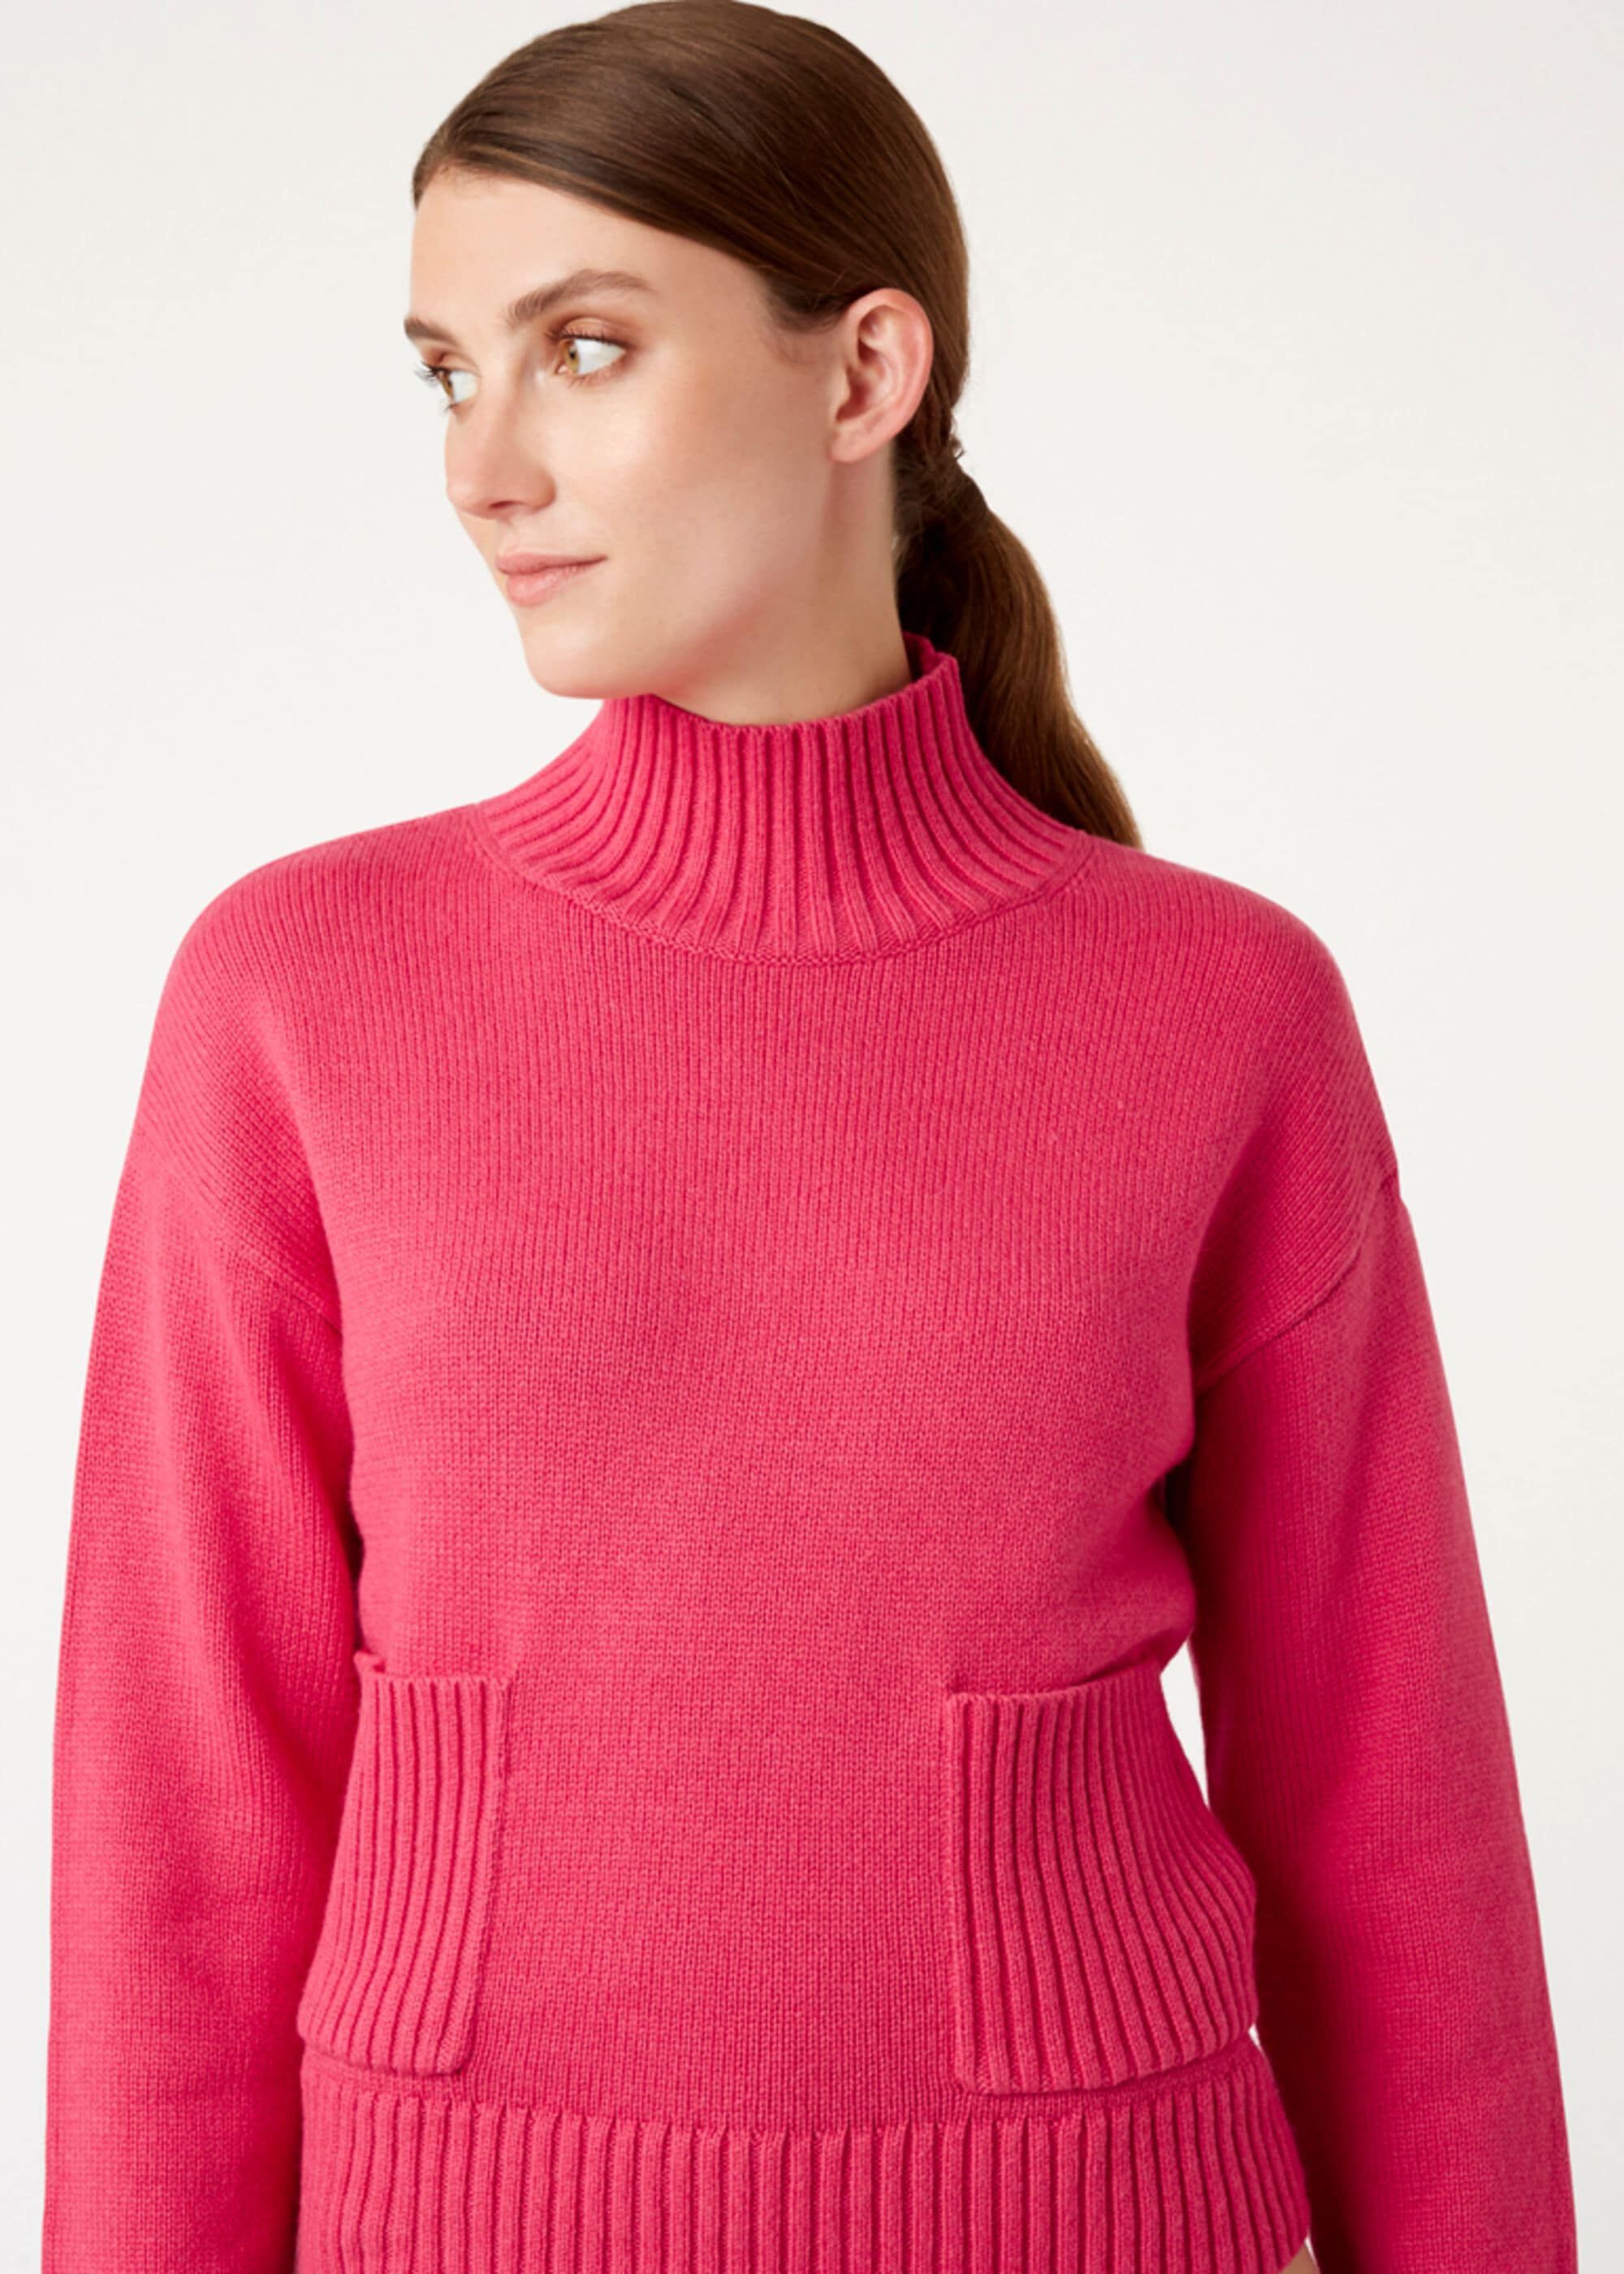 Hobbs Carla Sweater Pullover Long Sleeve | eBay